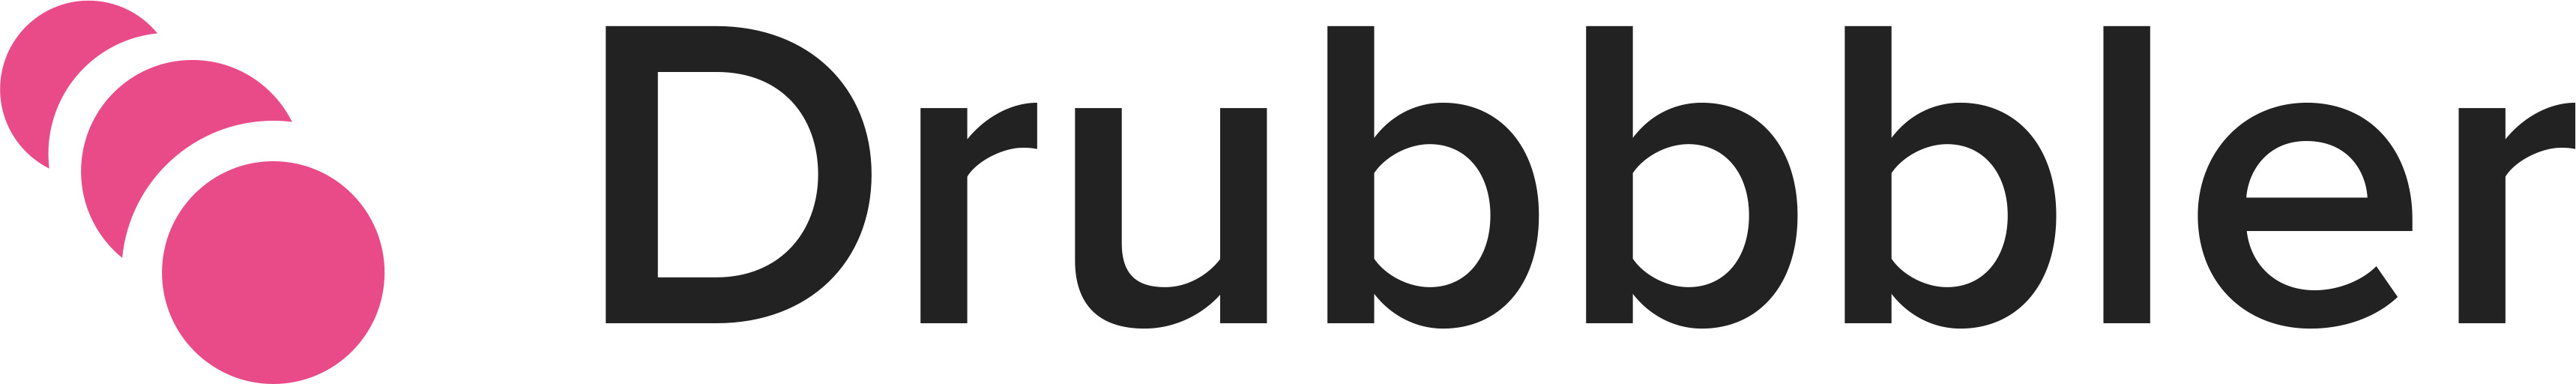 Drubbbler Logo icons